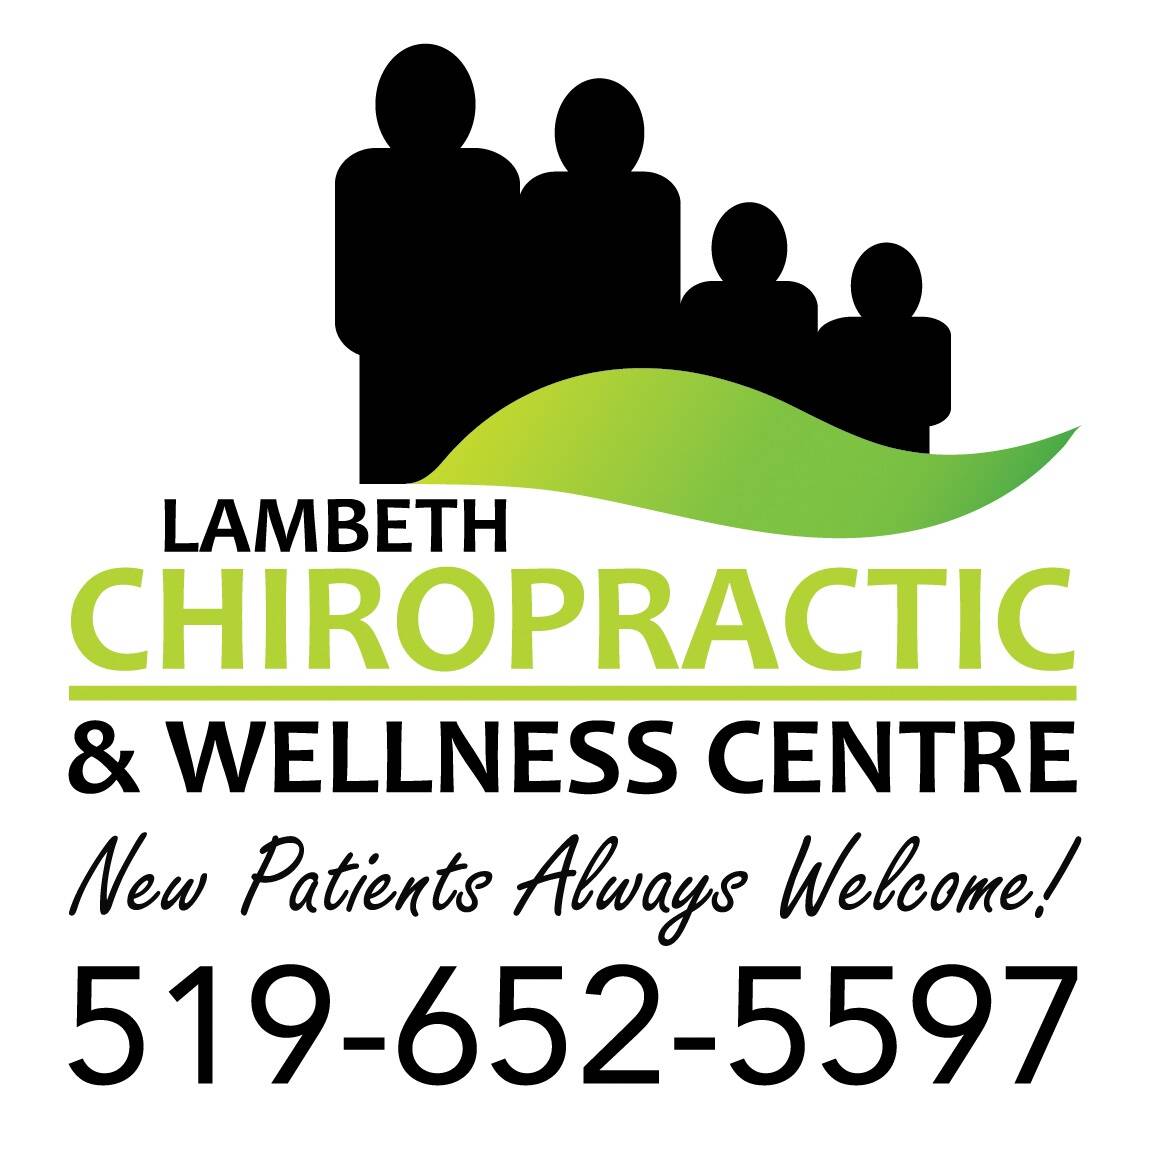 Lambeth Chiropractic and Wellness Center